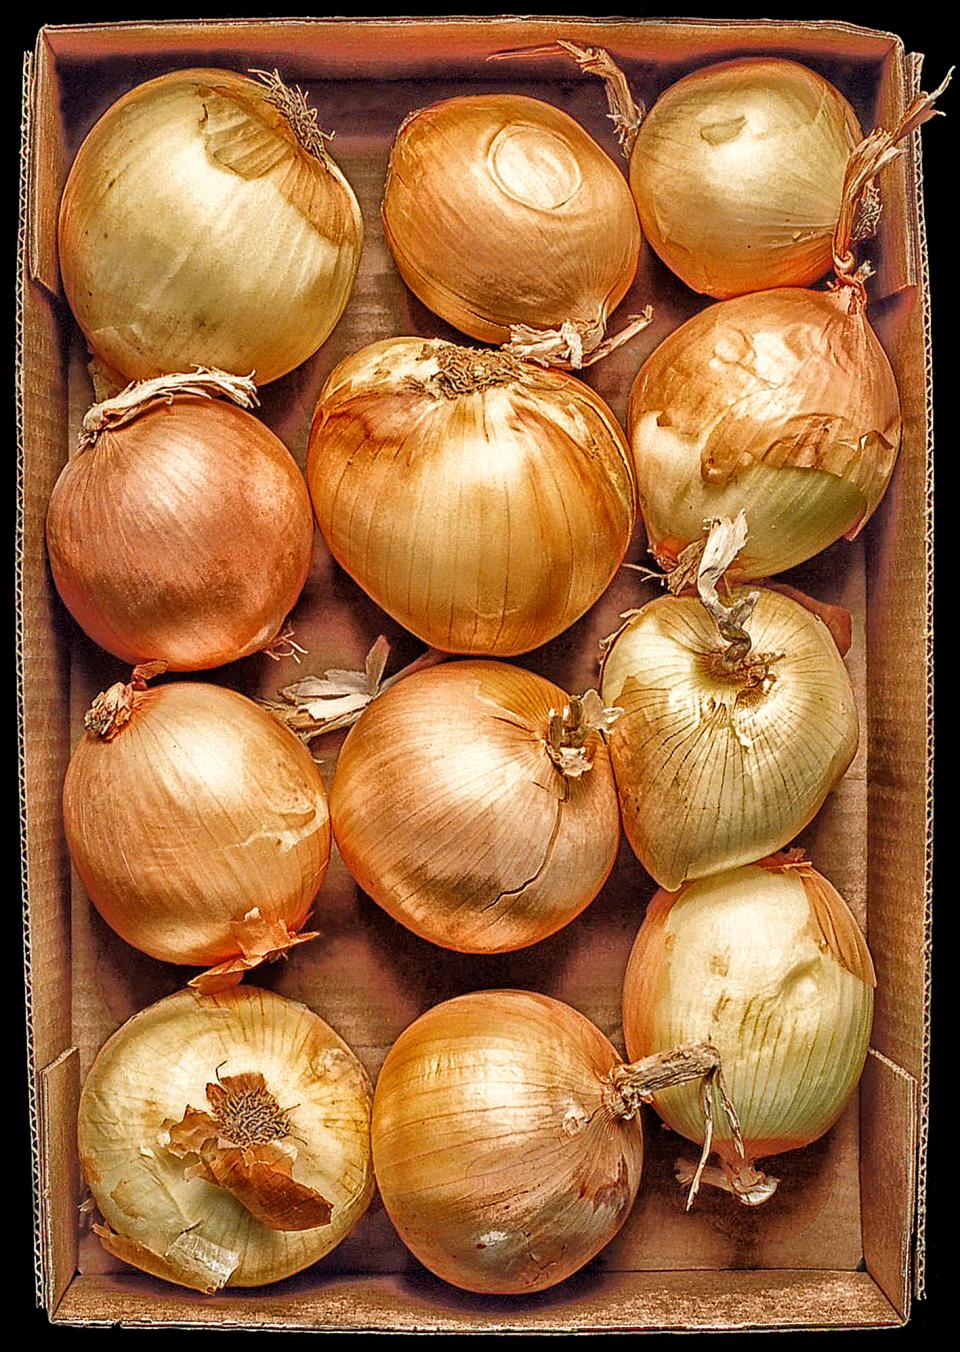 Onions in a Box